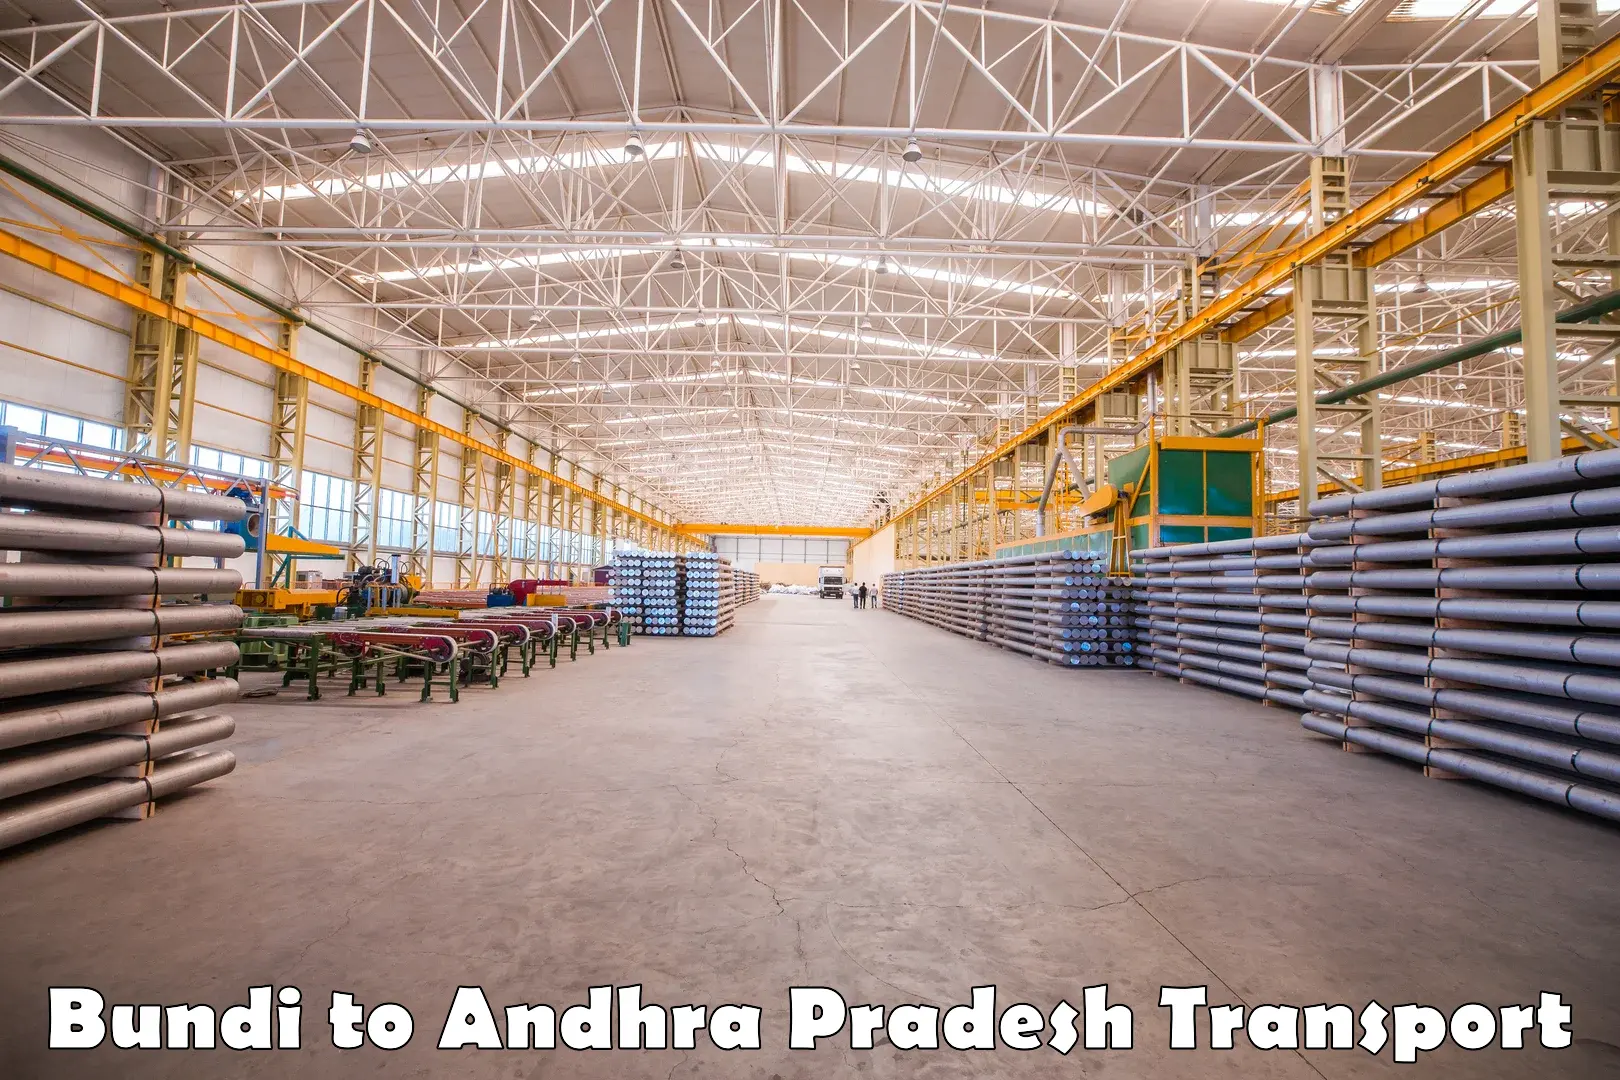 Sending bike to another city Bundi to Andhra Pradesh